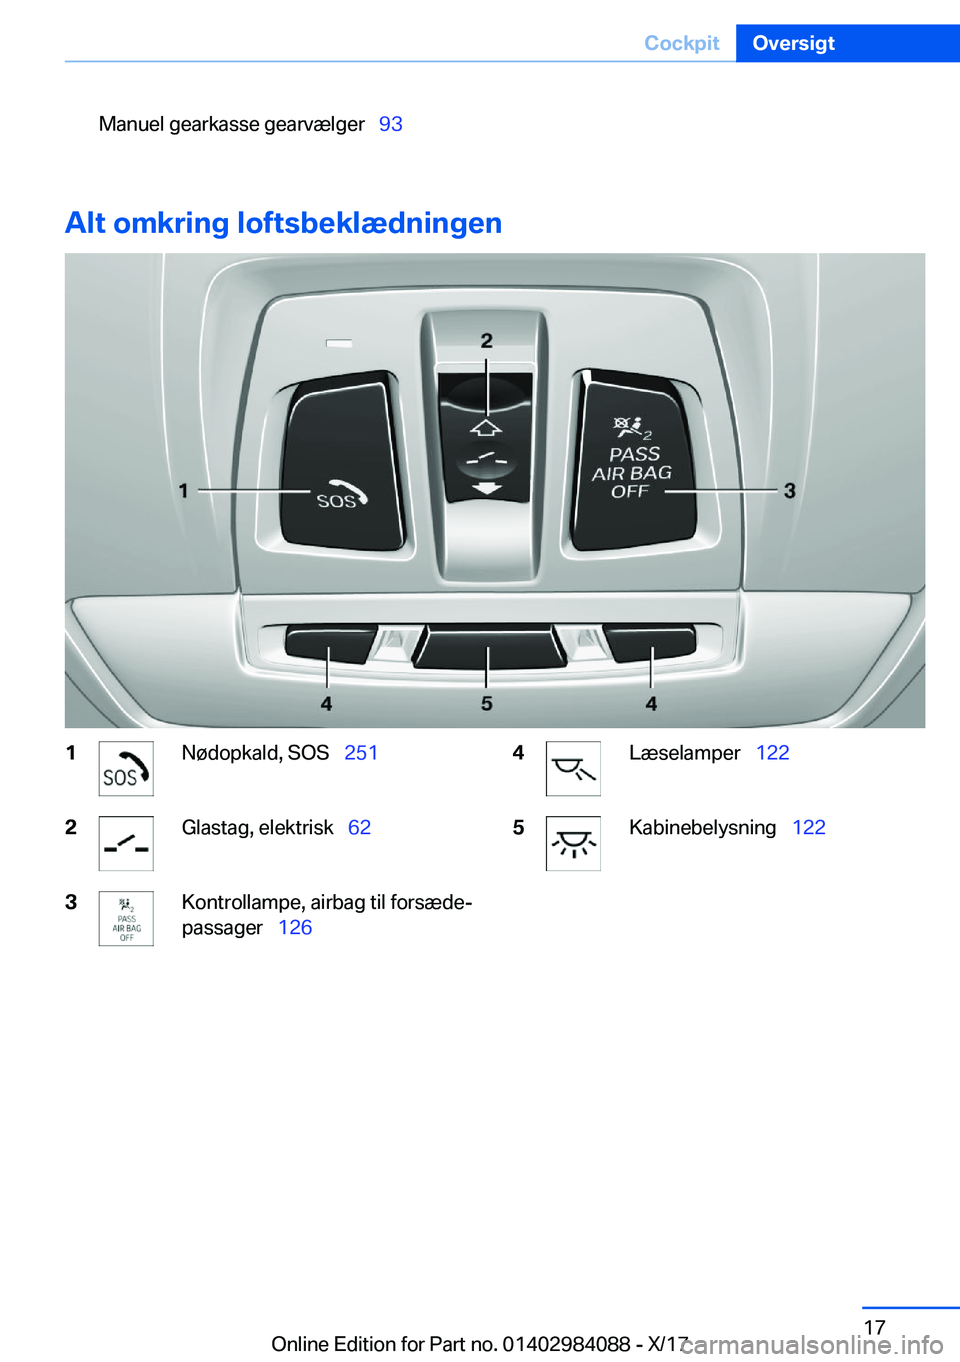 BMW 3 SERIES 2018  InstruktionsbØger (in Danish) �M�a�n�u�e�l� �g�e�a�r�k�a�s�s�e� �g�e�a�r�v�æ�l�g�e�r\_�9�3
�A�l�t��o�m�k�r�i�n�g��l�o�f�t�s�b�e�k�l�æ�d�n�i�n�g�e�n
�1�N�